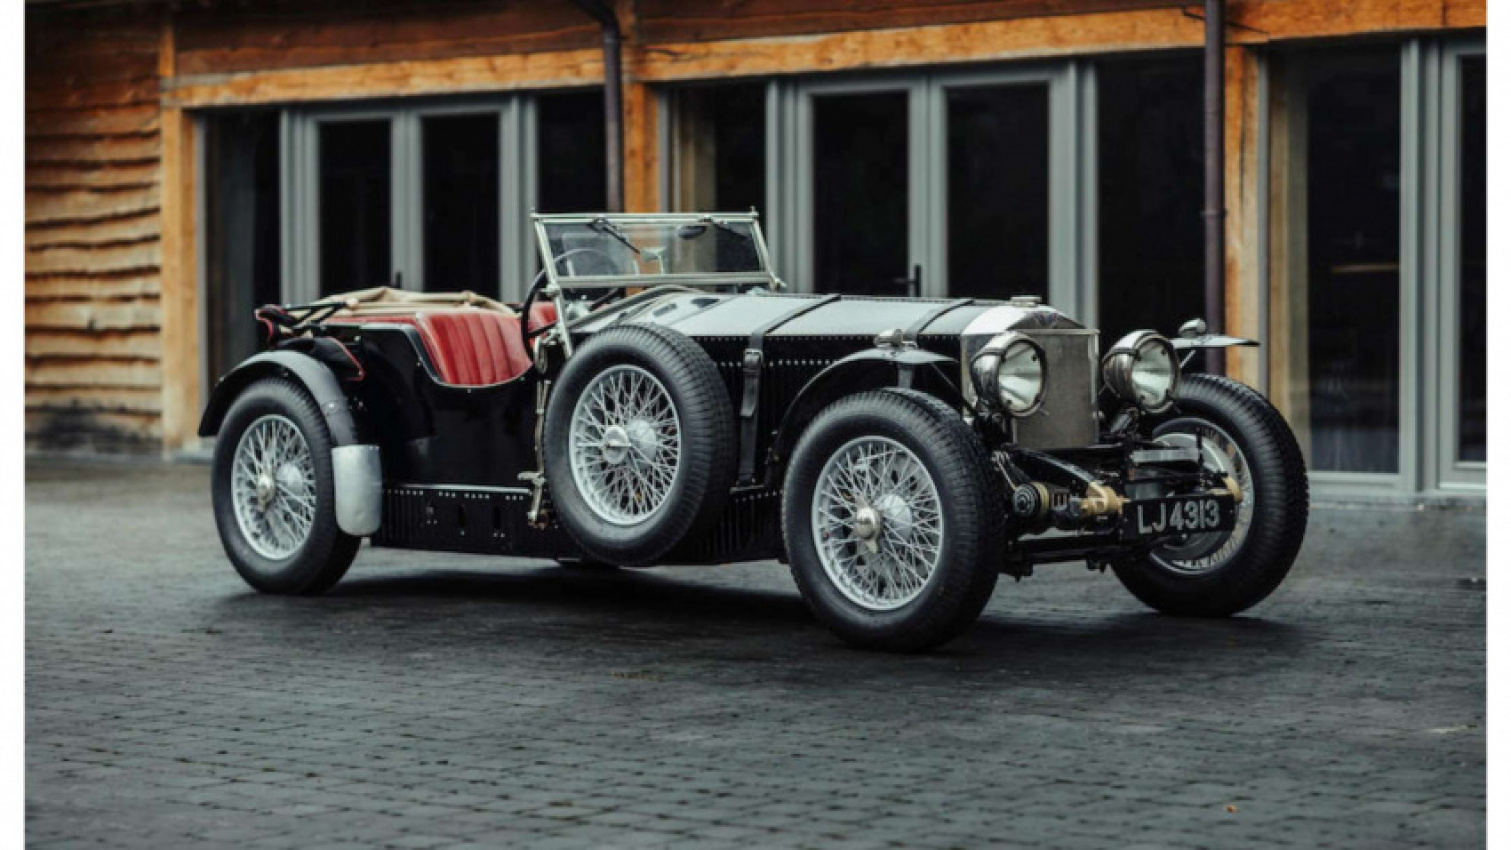 autos, bugatti, cars, bonhams, eb110, invicta, porsche, type 57, beautiful bugattis star in paris auction | grr